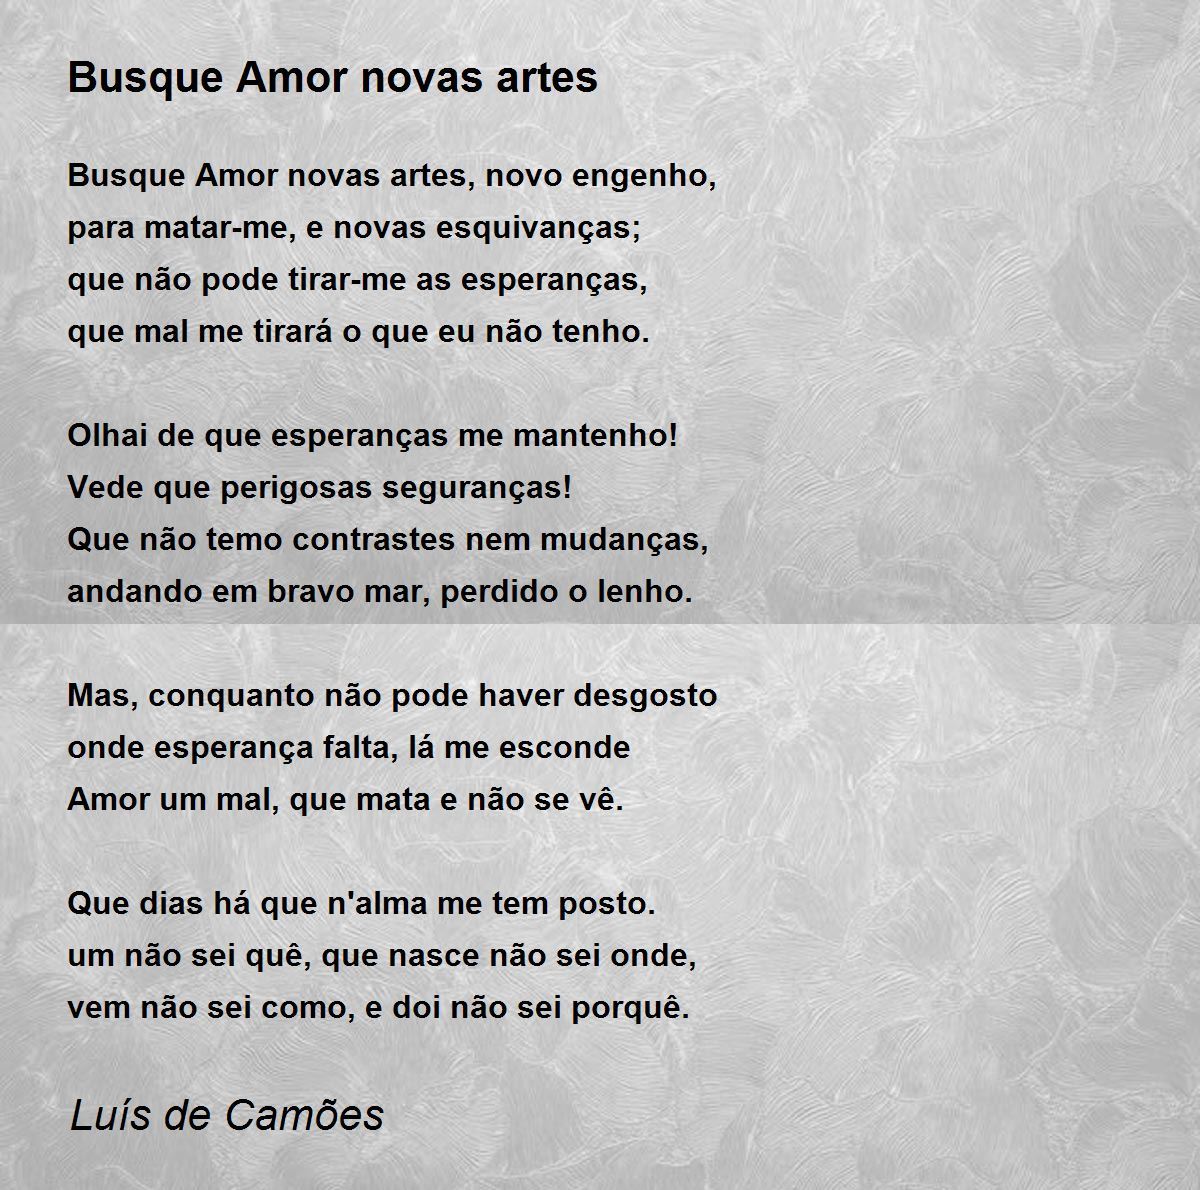 Busque Amor novas artes - Busque Amor novas artes Poem by Luís de Camões